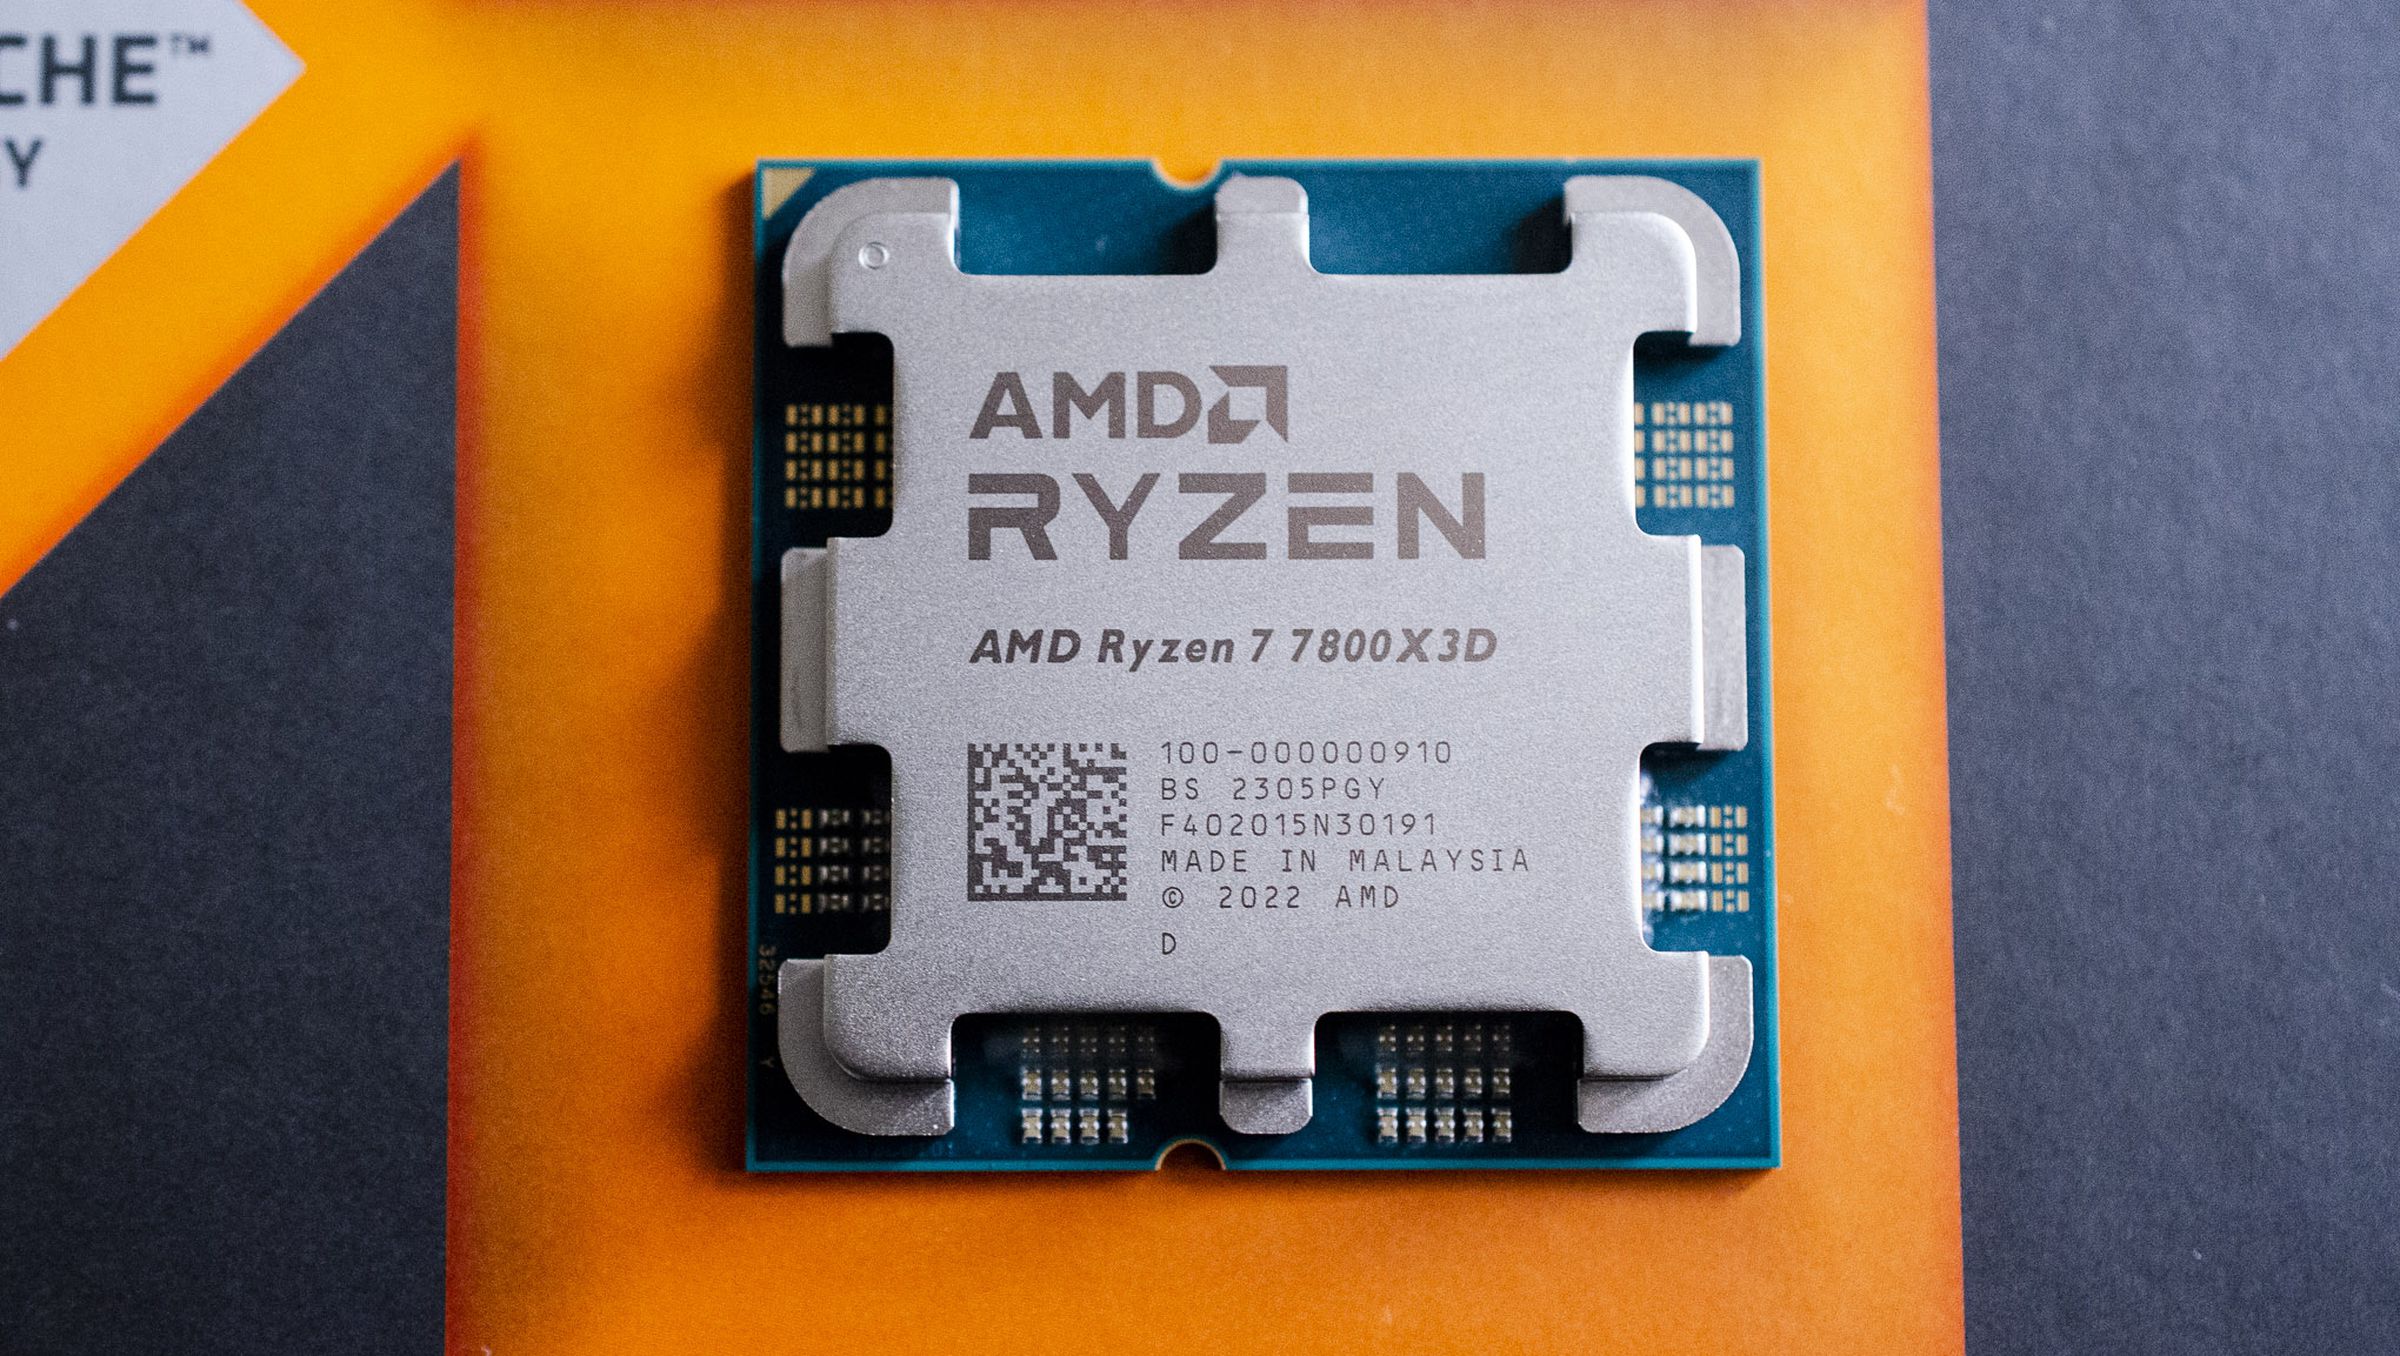 Amd Ryzen 9000X3D “3D V-Cache” Cpus With Zen 5 Cores To Offer Cool New Features, Even Better Than Ryzen 7000X3D  